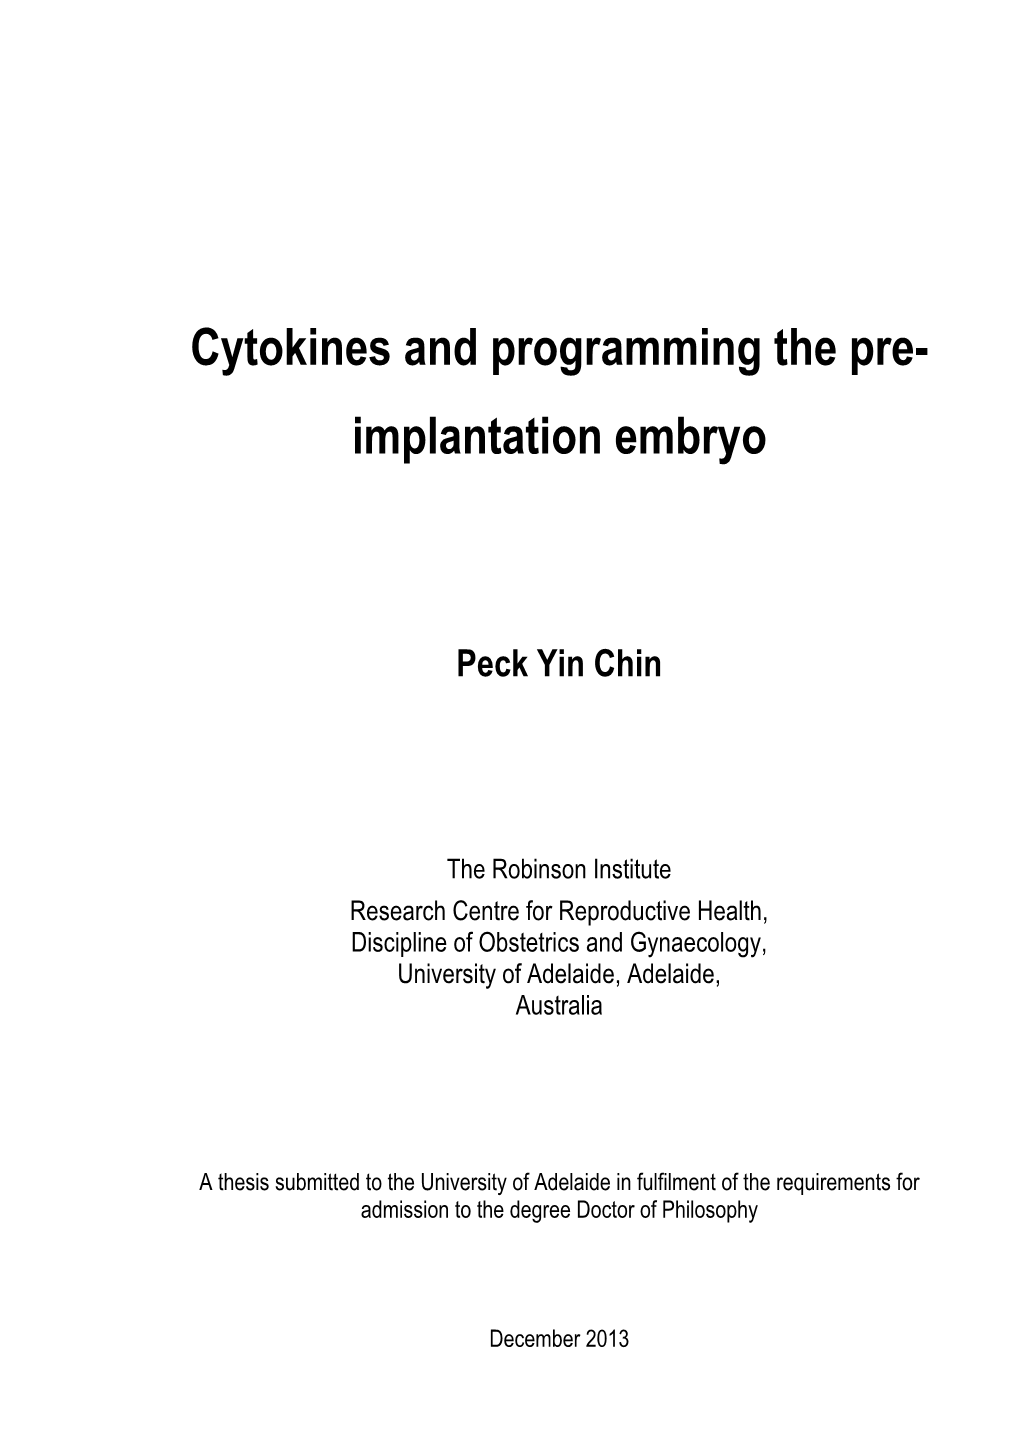 Cytokines and Programming the Pre-Implantation Embryo